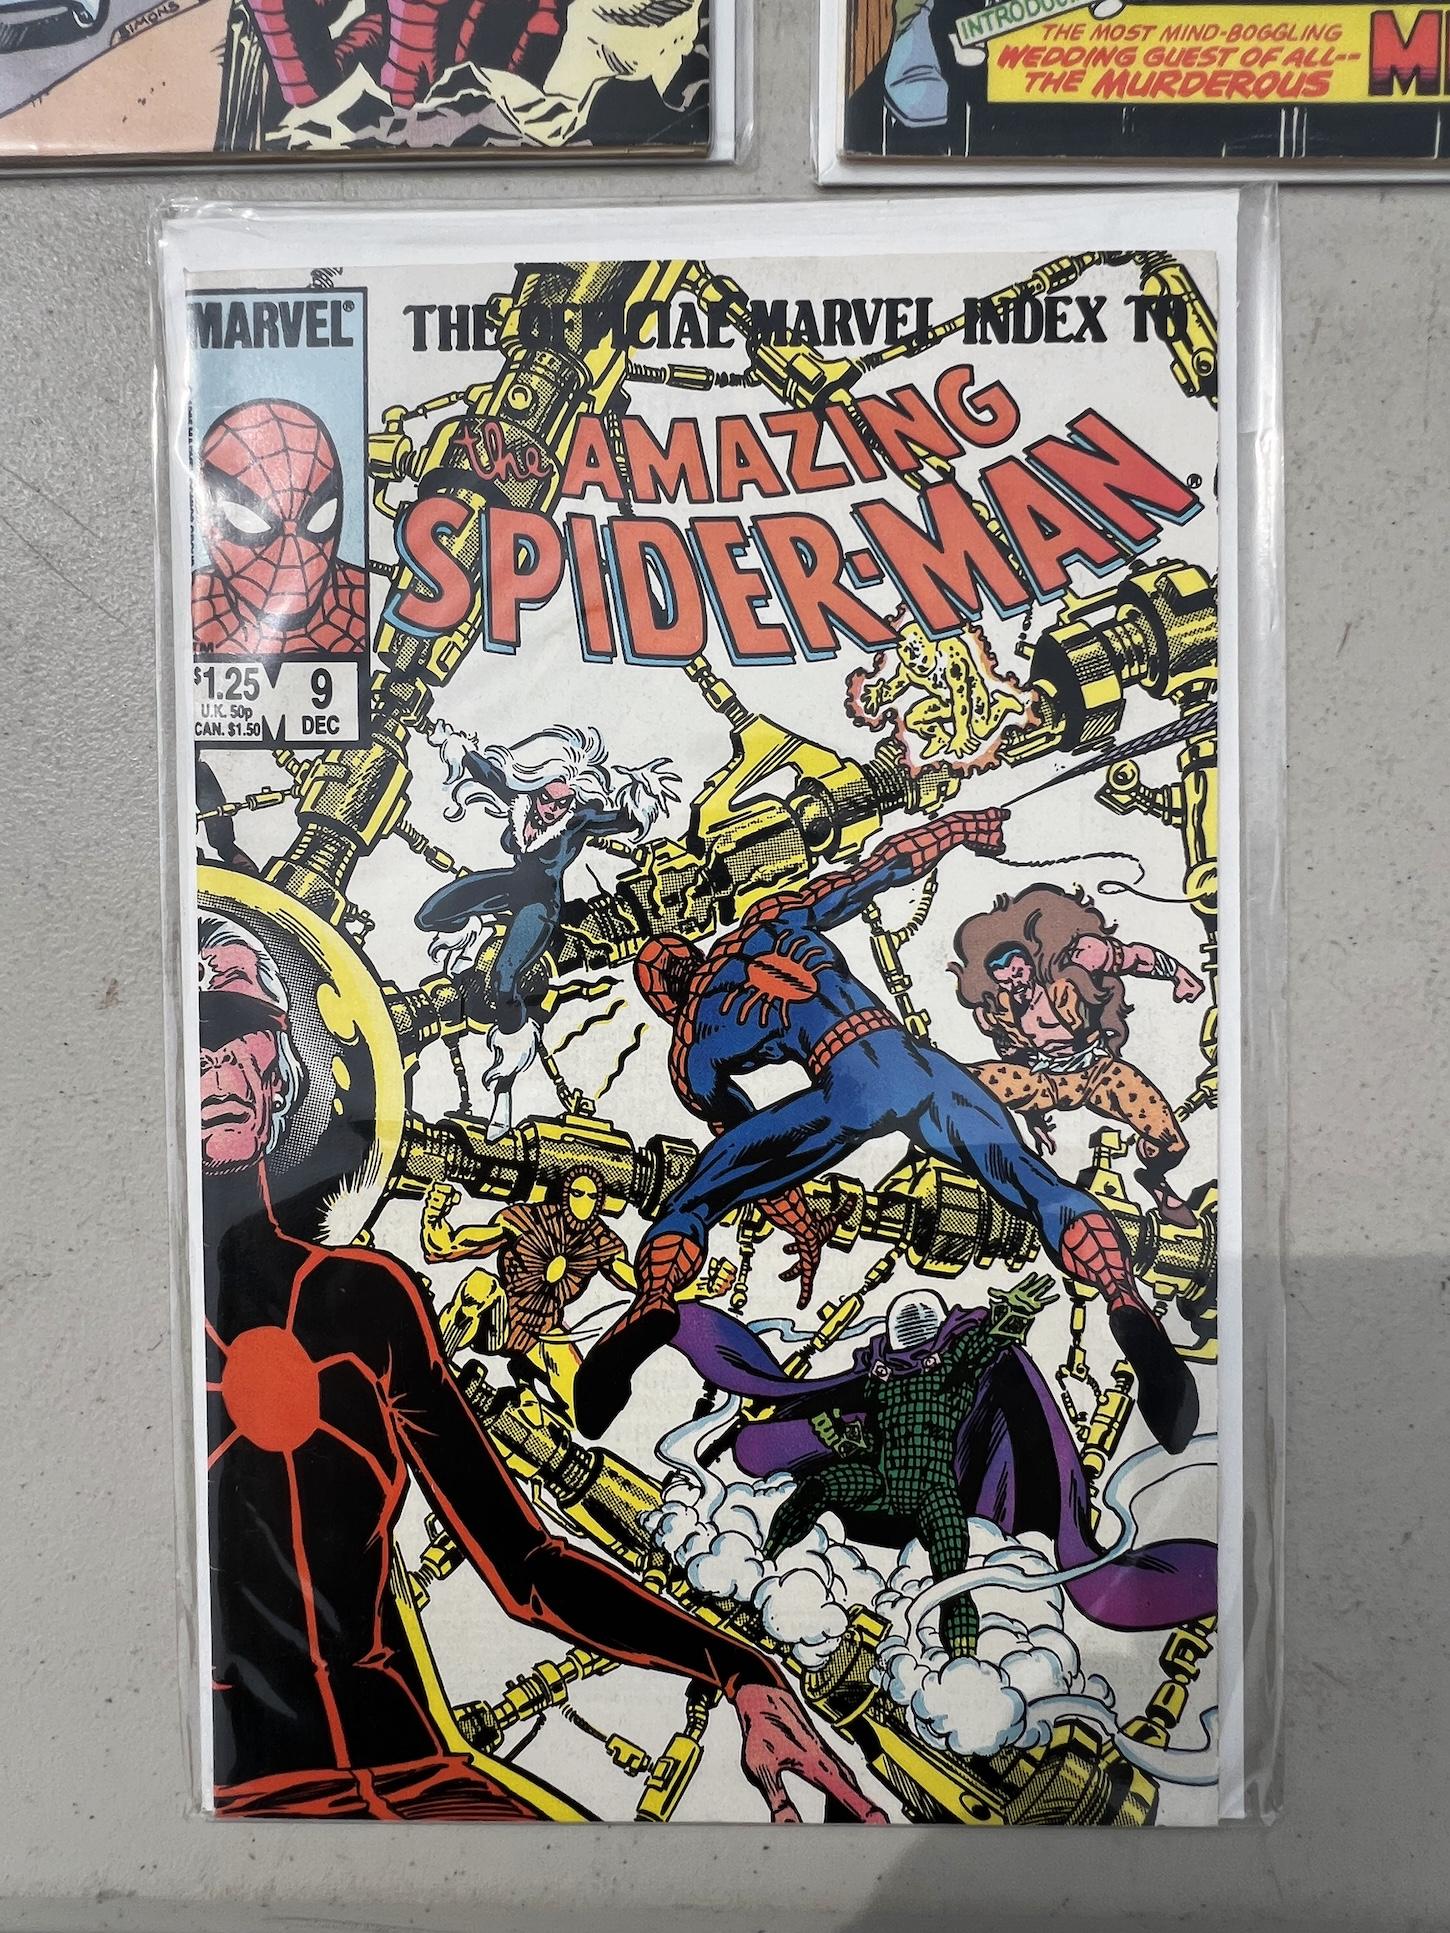 Comic Book Spider-Man 9, 156, 27 collection lot 3 Marvel Comics